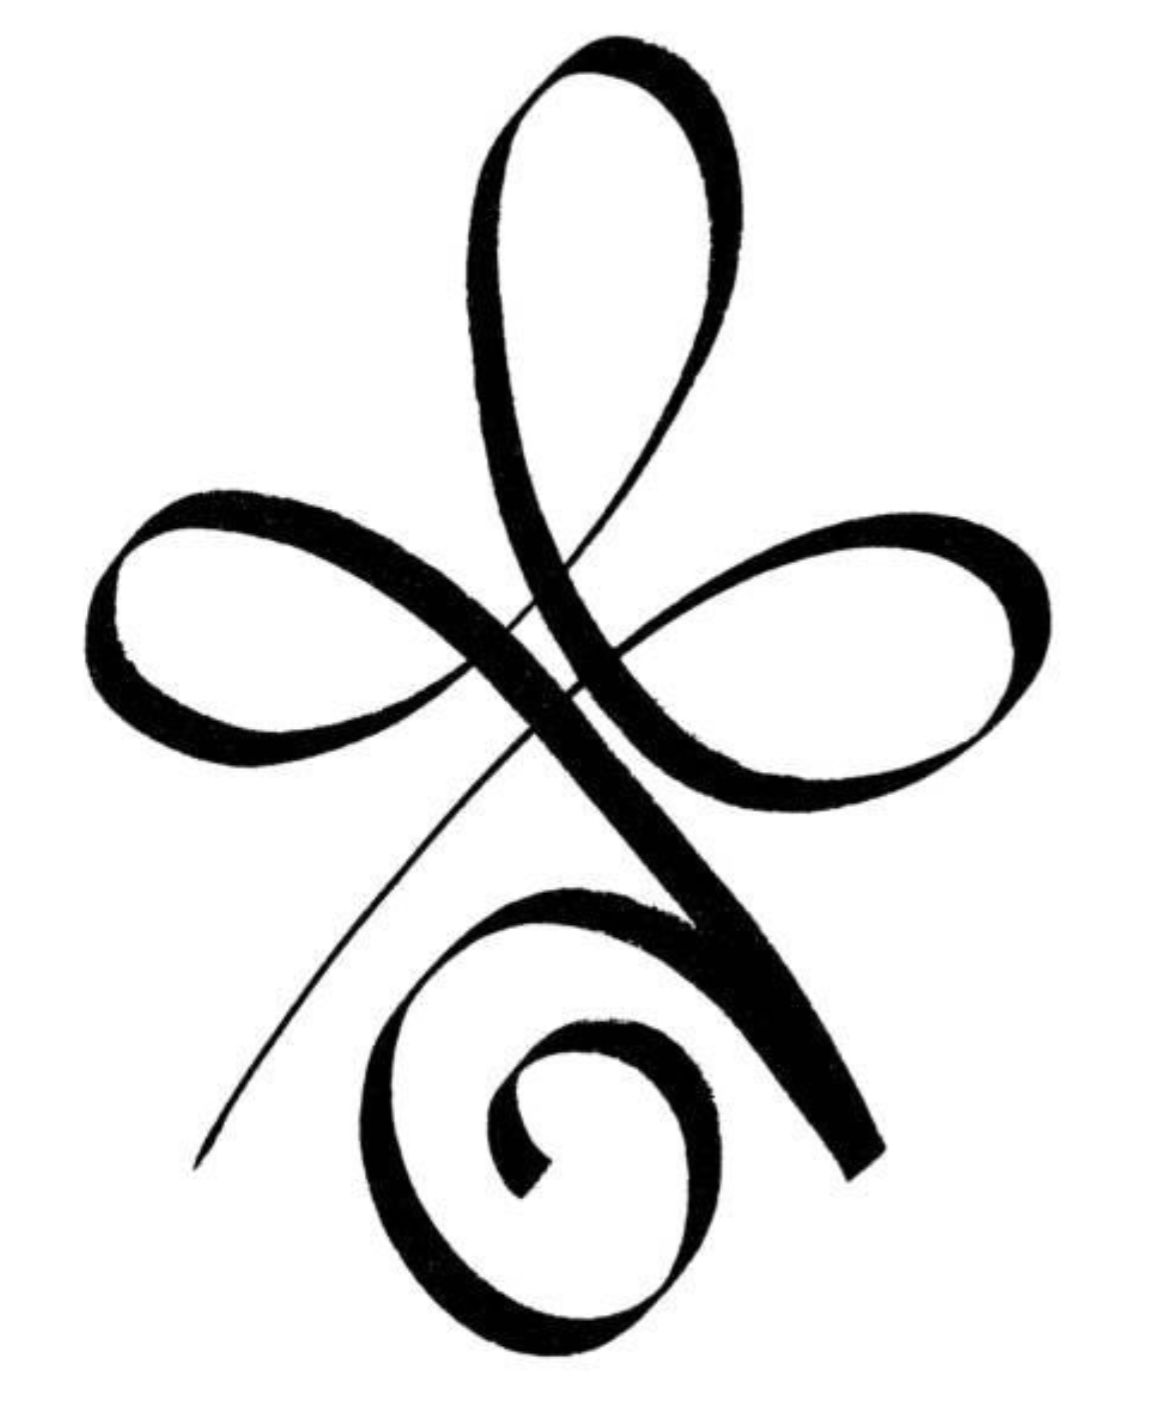 Minimalistic peace symbol tattoo located on the inner